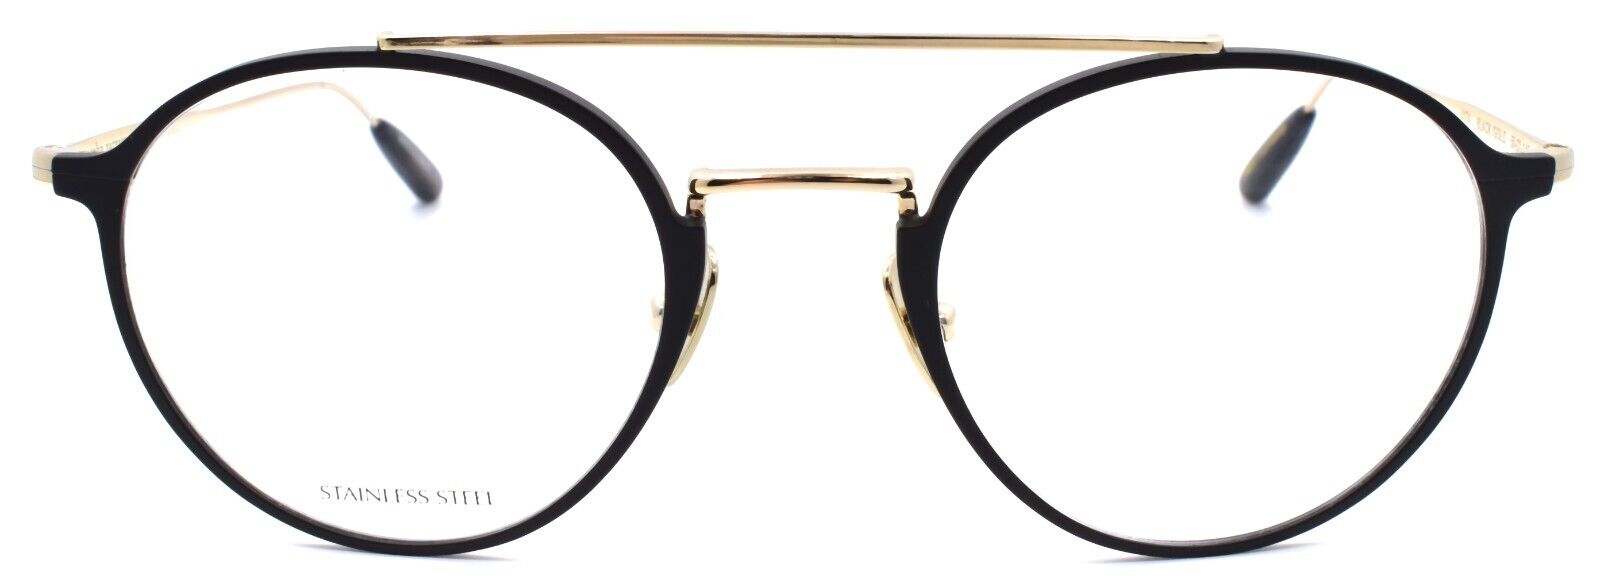 2-John Varvatos V174 Men's Eyeglasses Frames Aviator 50-22-145 Black / Gold Japan-751286330212-IKSpecs